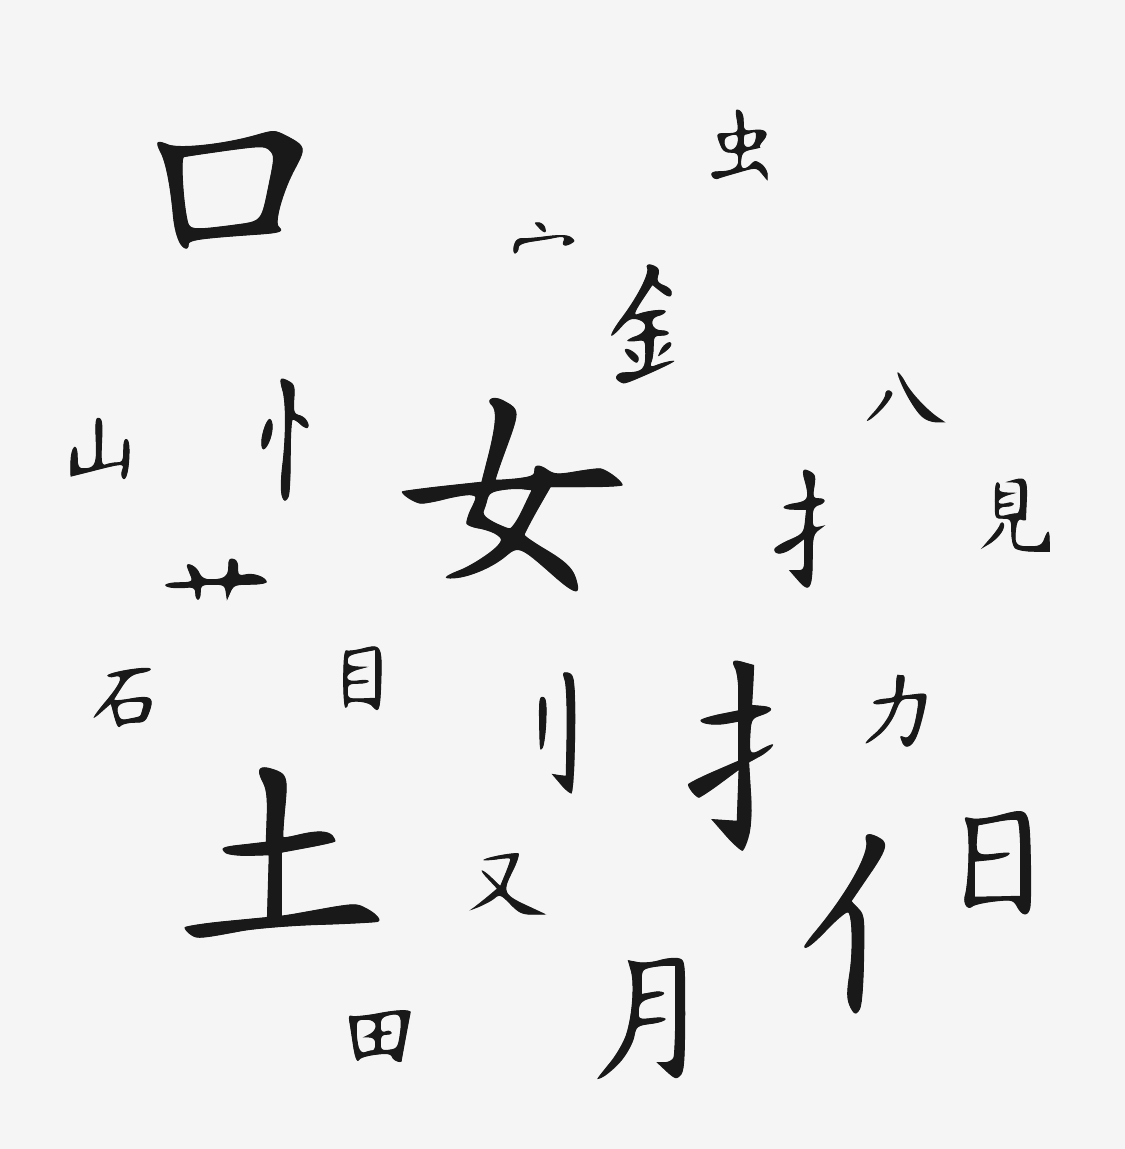 Learning Chinese: Writing made easy  by Jon Wong  Medium